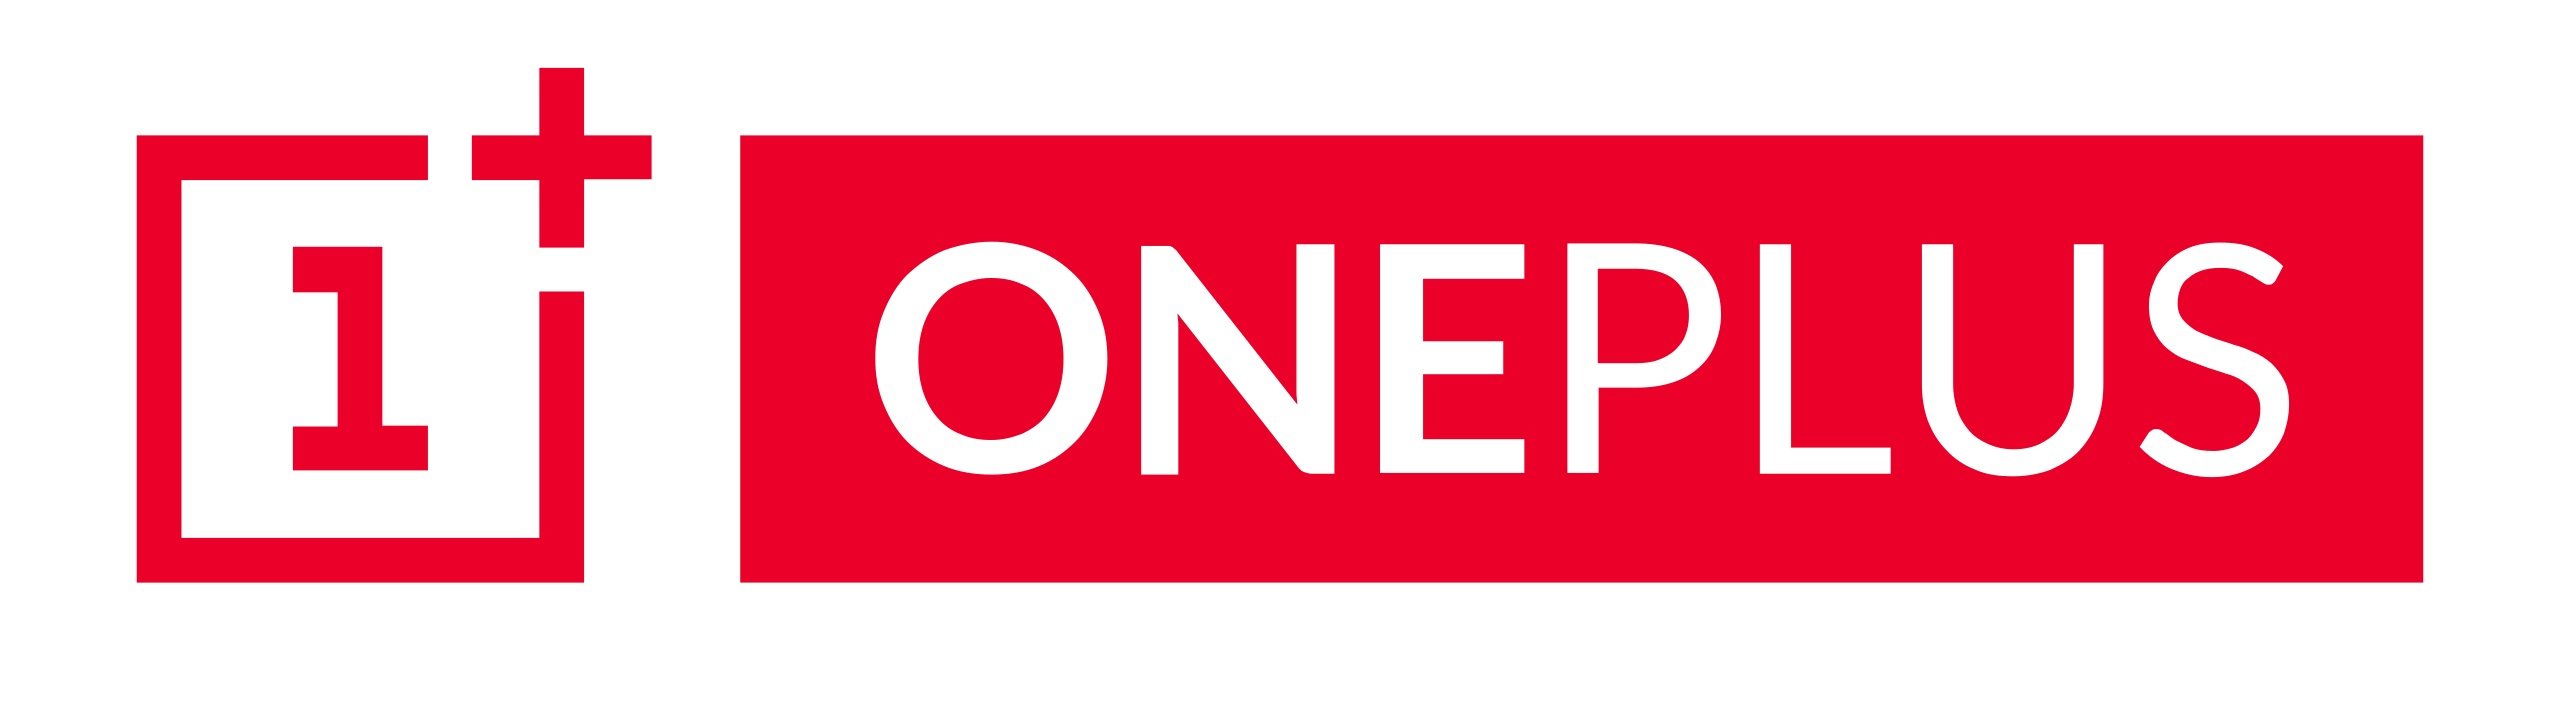 OnePlus Brand Banner